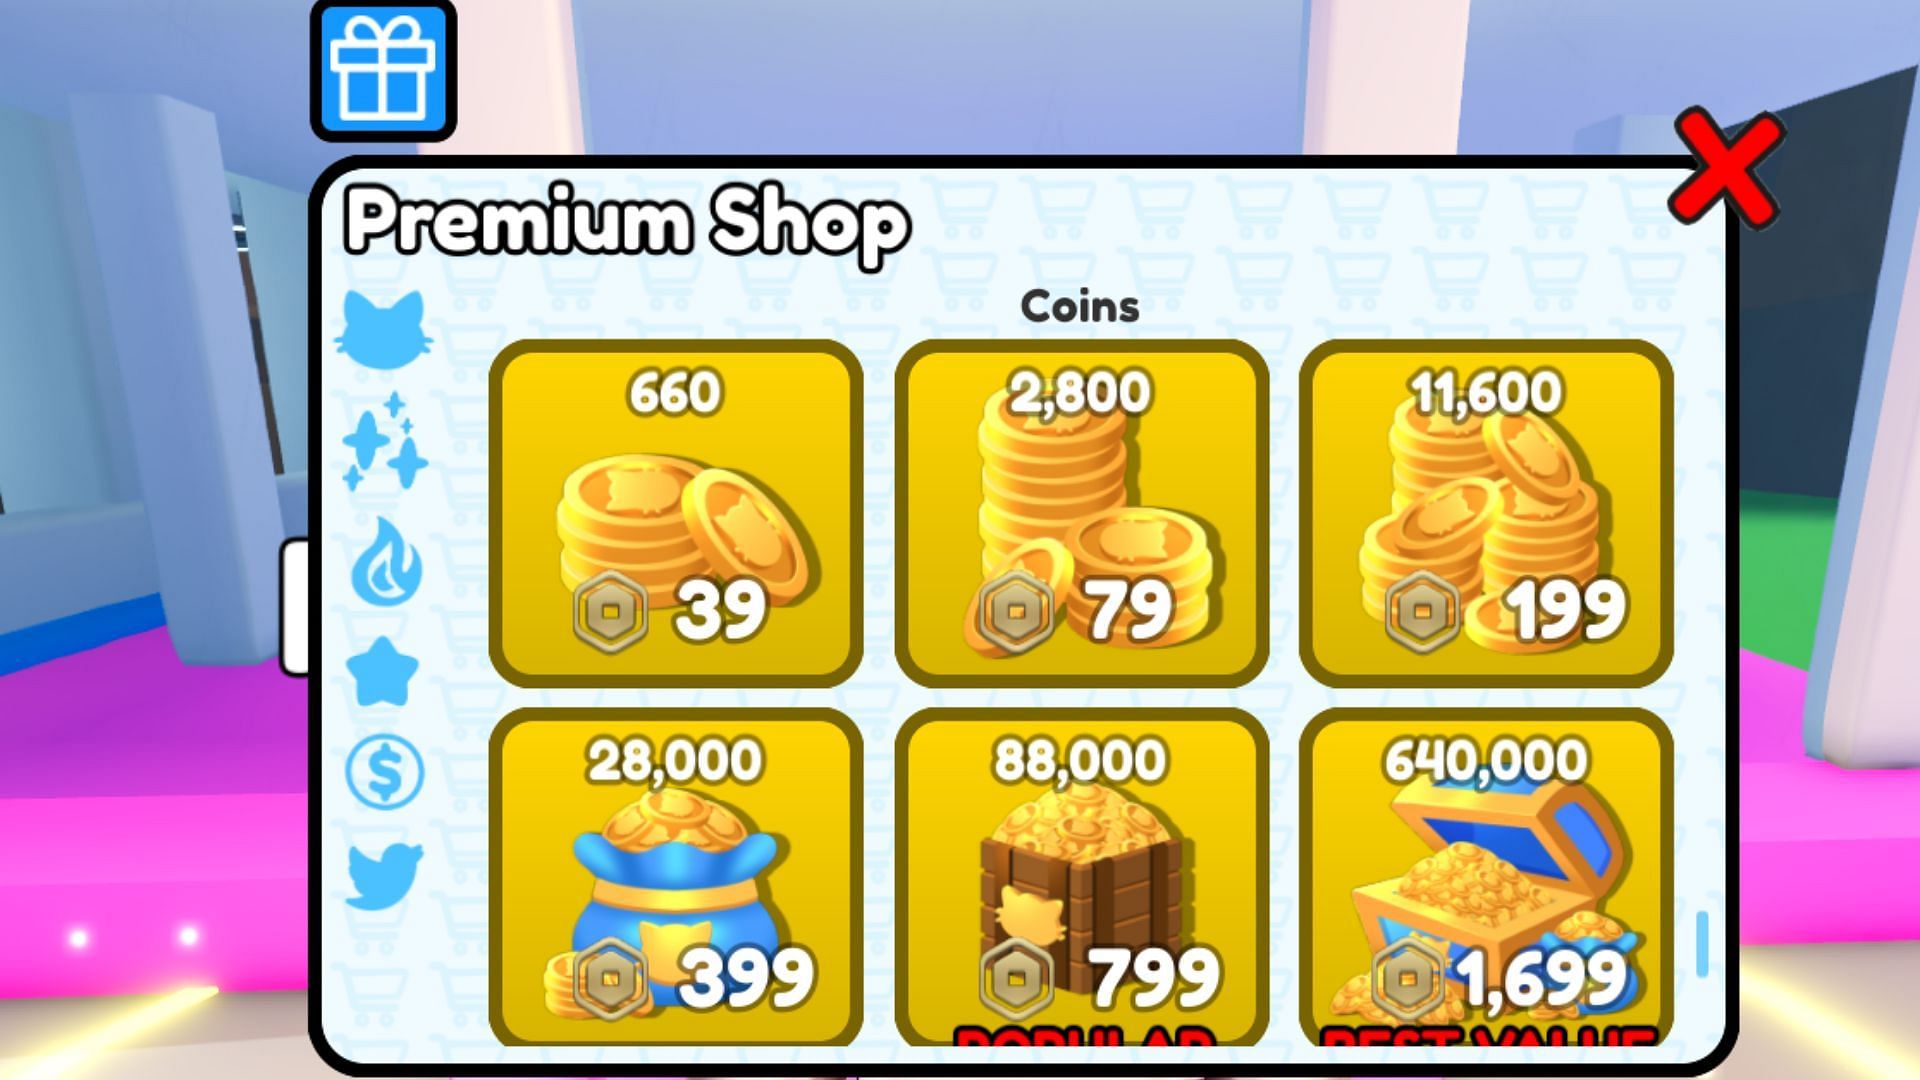 Premium Shop in Smashing Simulator X (Image via Roblox)